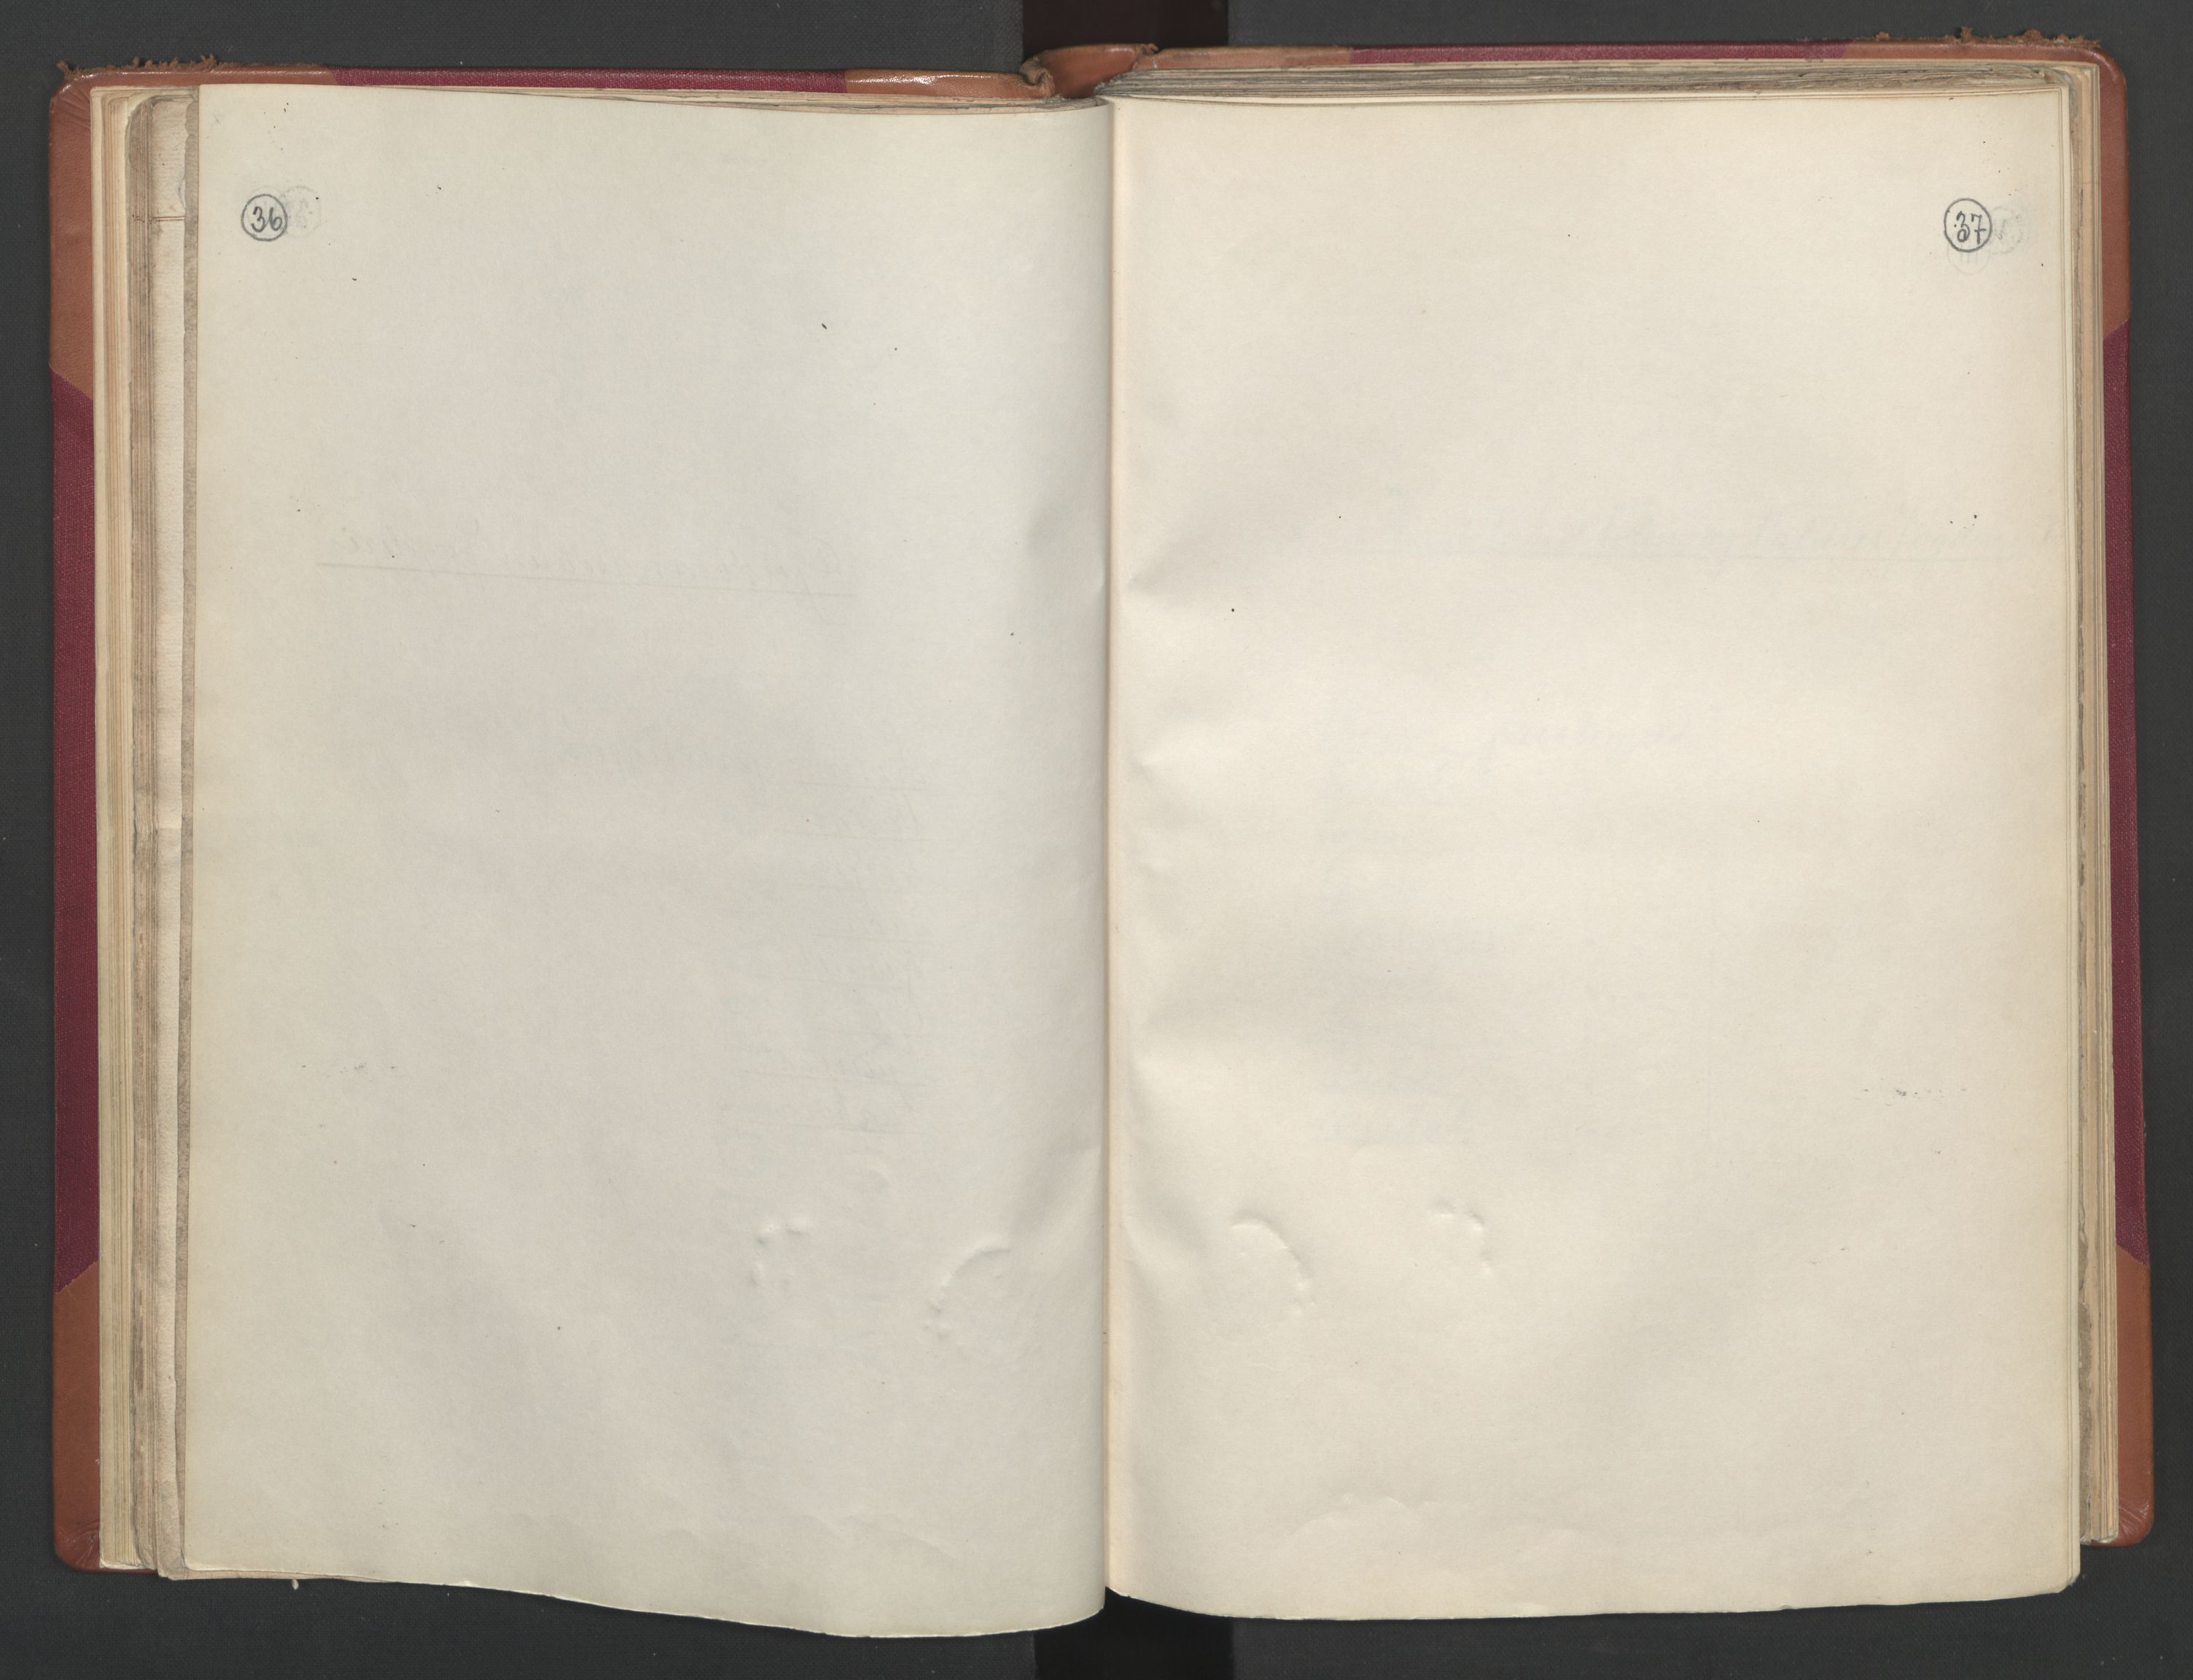 RA, Manntallet 1701, nr. 2: Solør, Odal og Østerdal fogderi og Larvik grevskap, 1701, s. 36-37